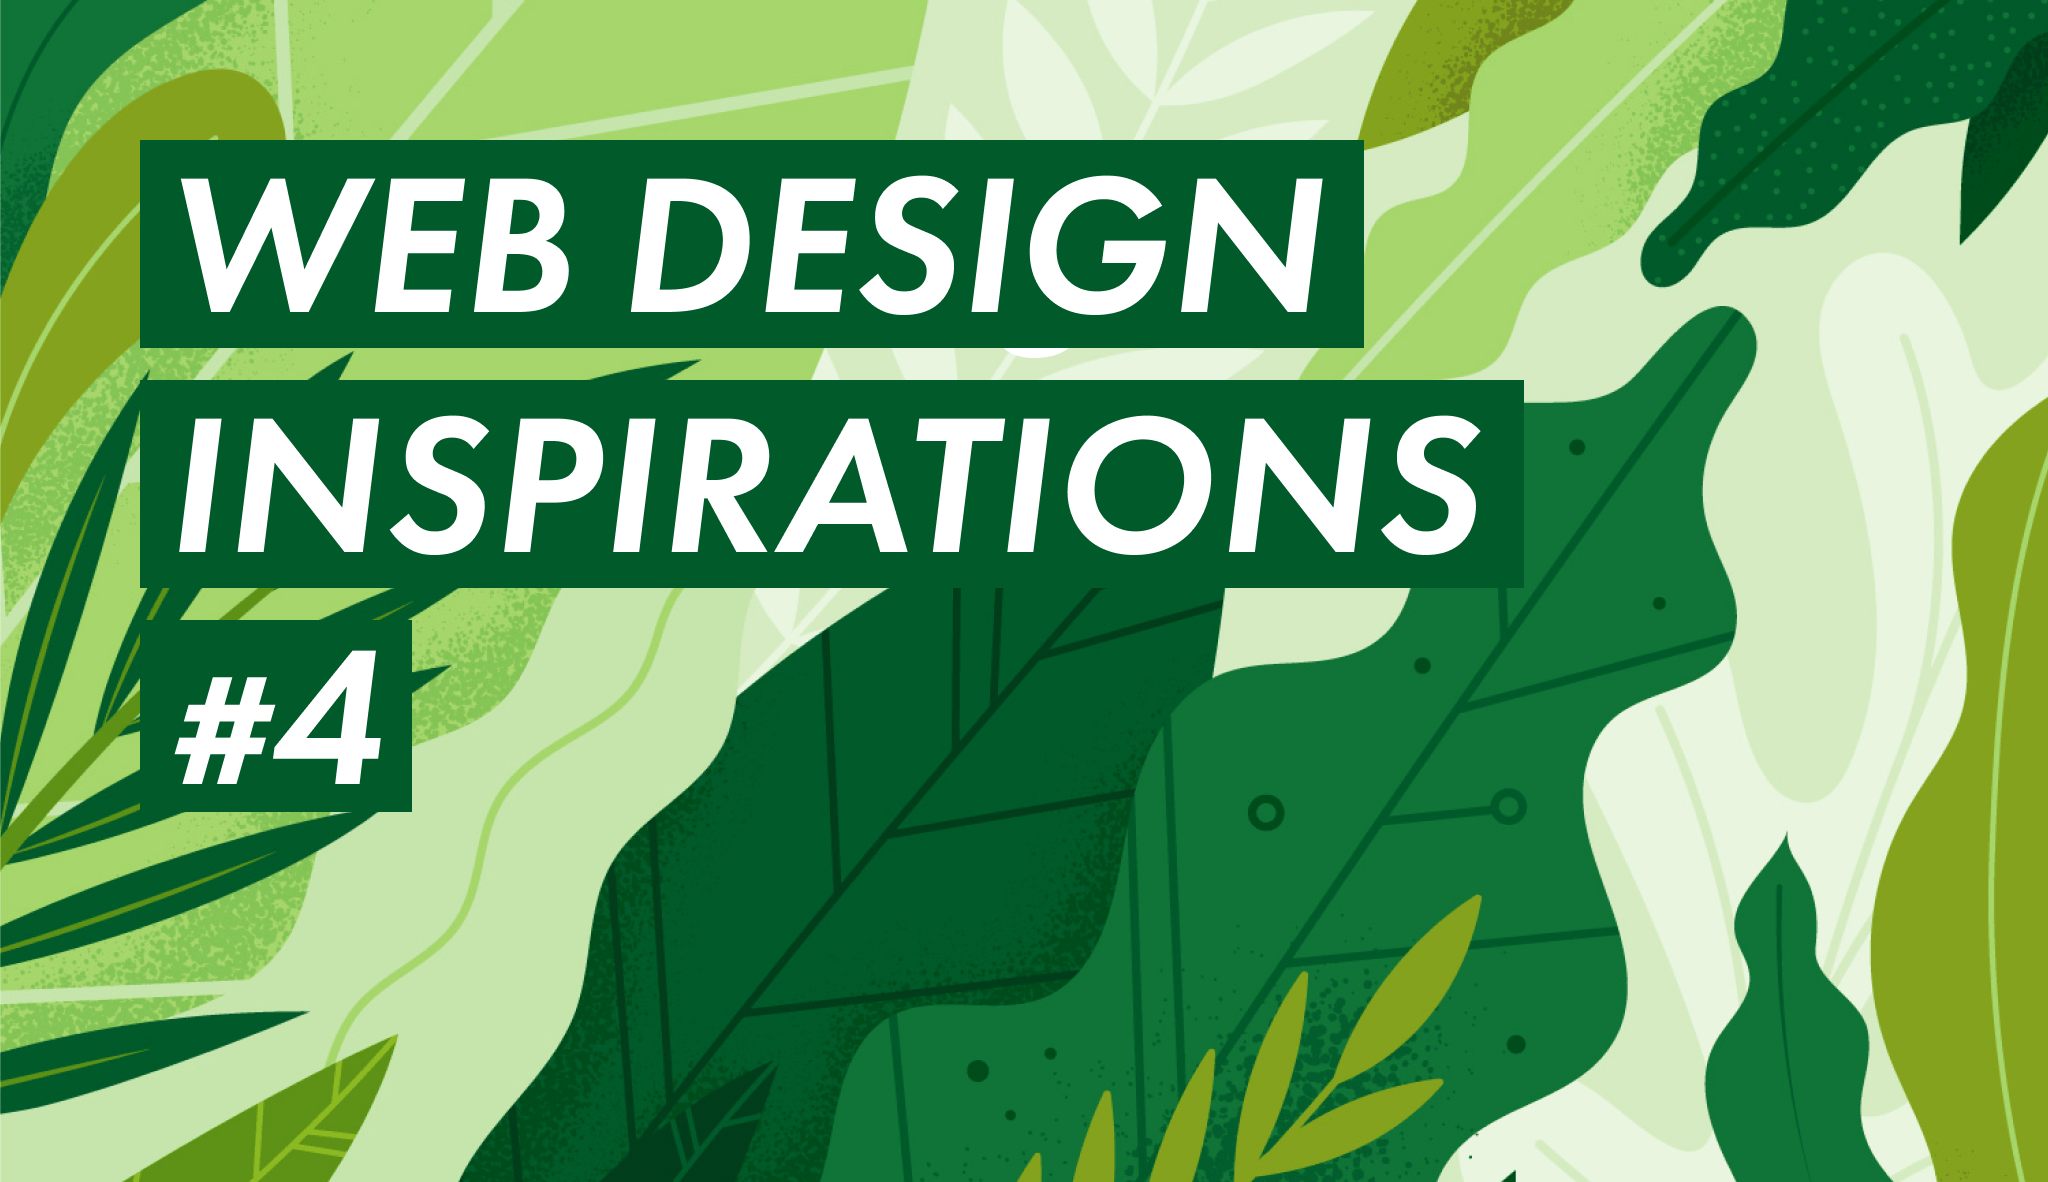 Web Design Inspirations #4